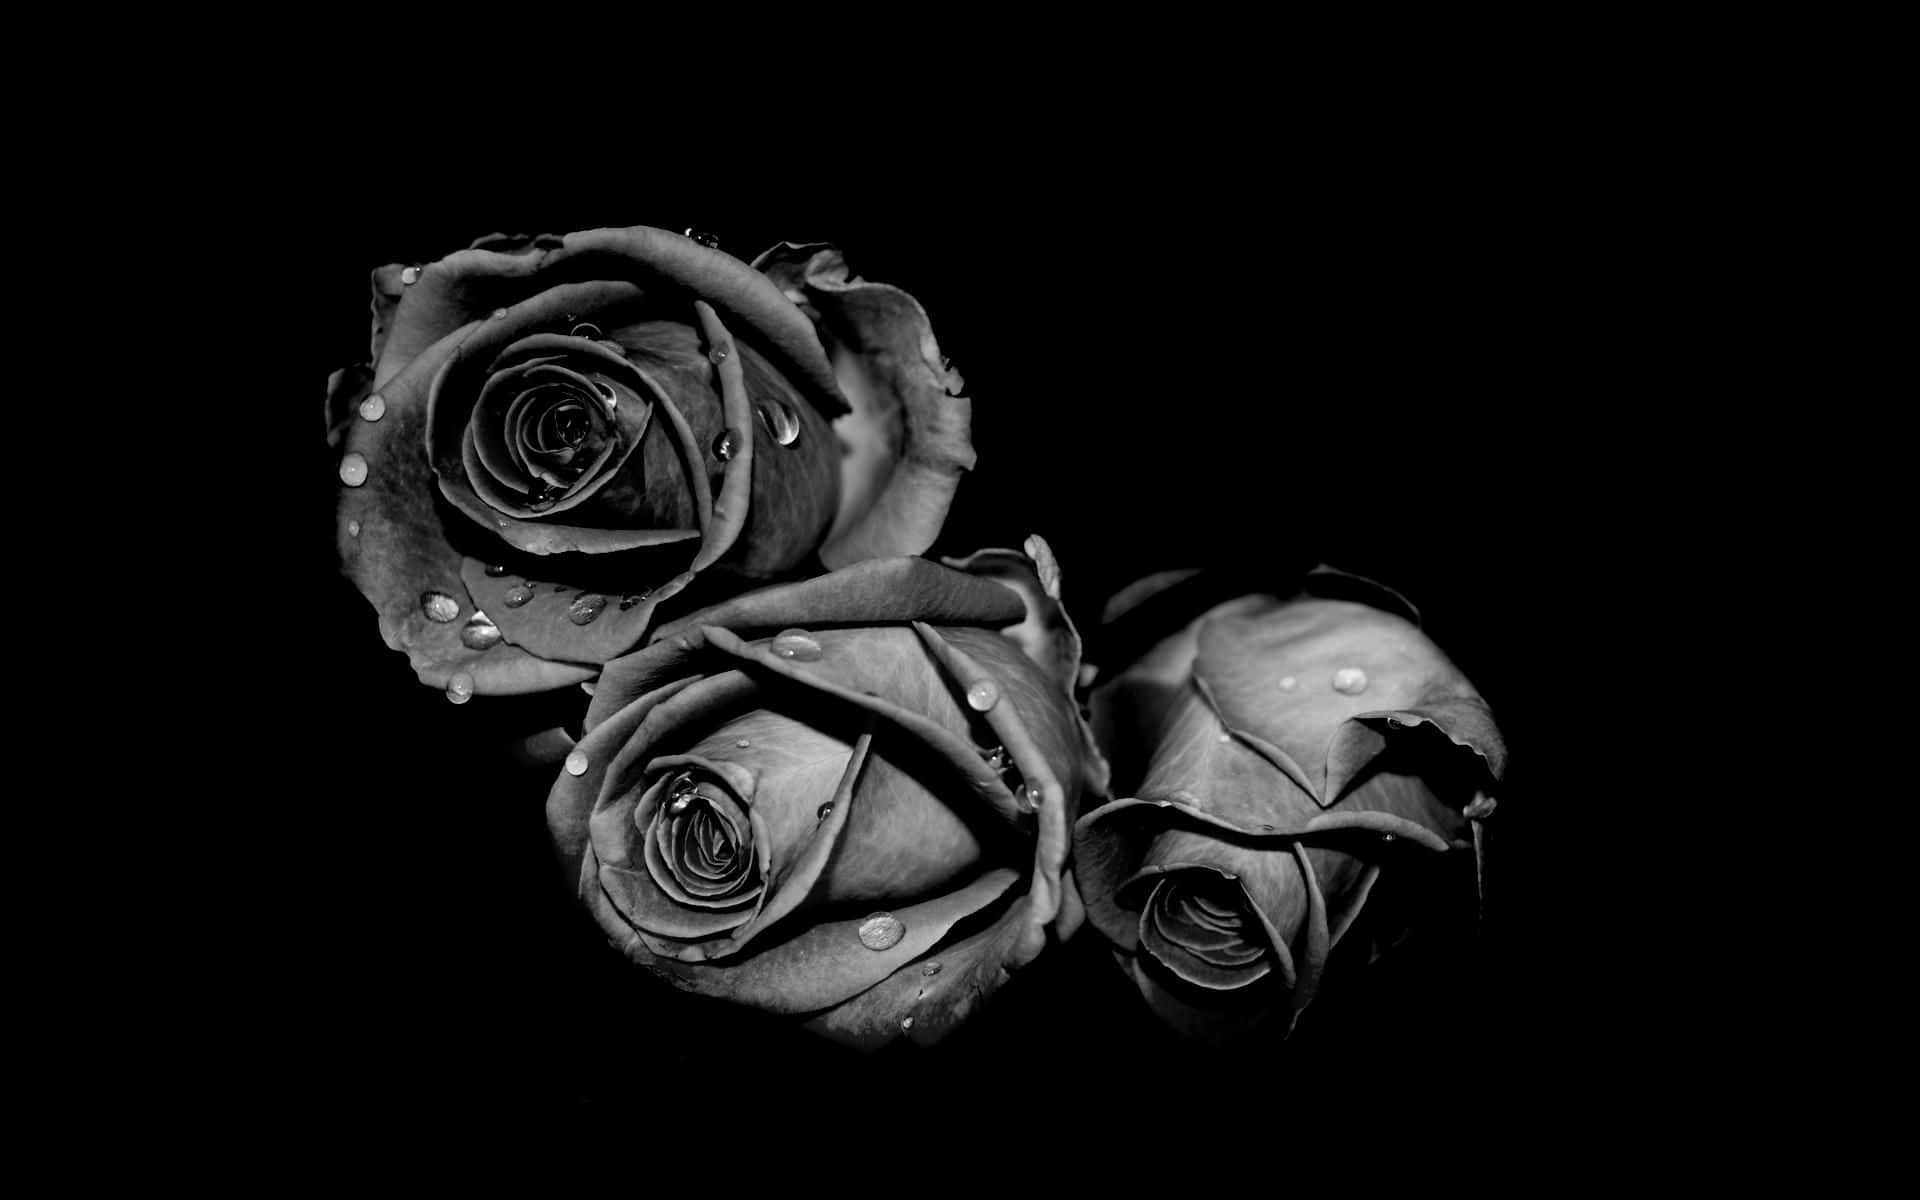 Contrasting Beauty - Elegant Black and White Flower